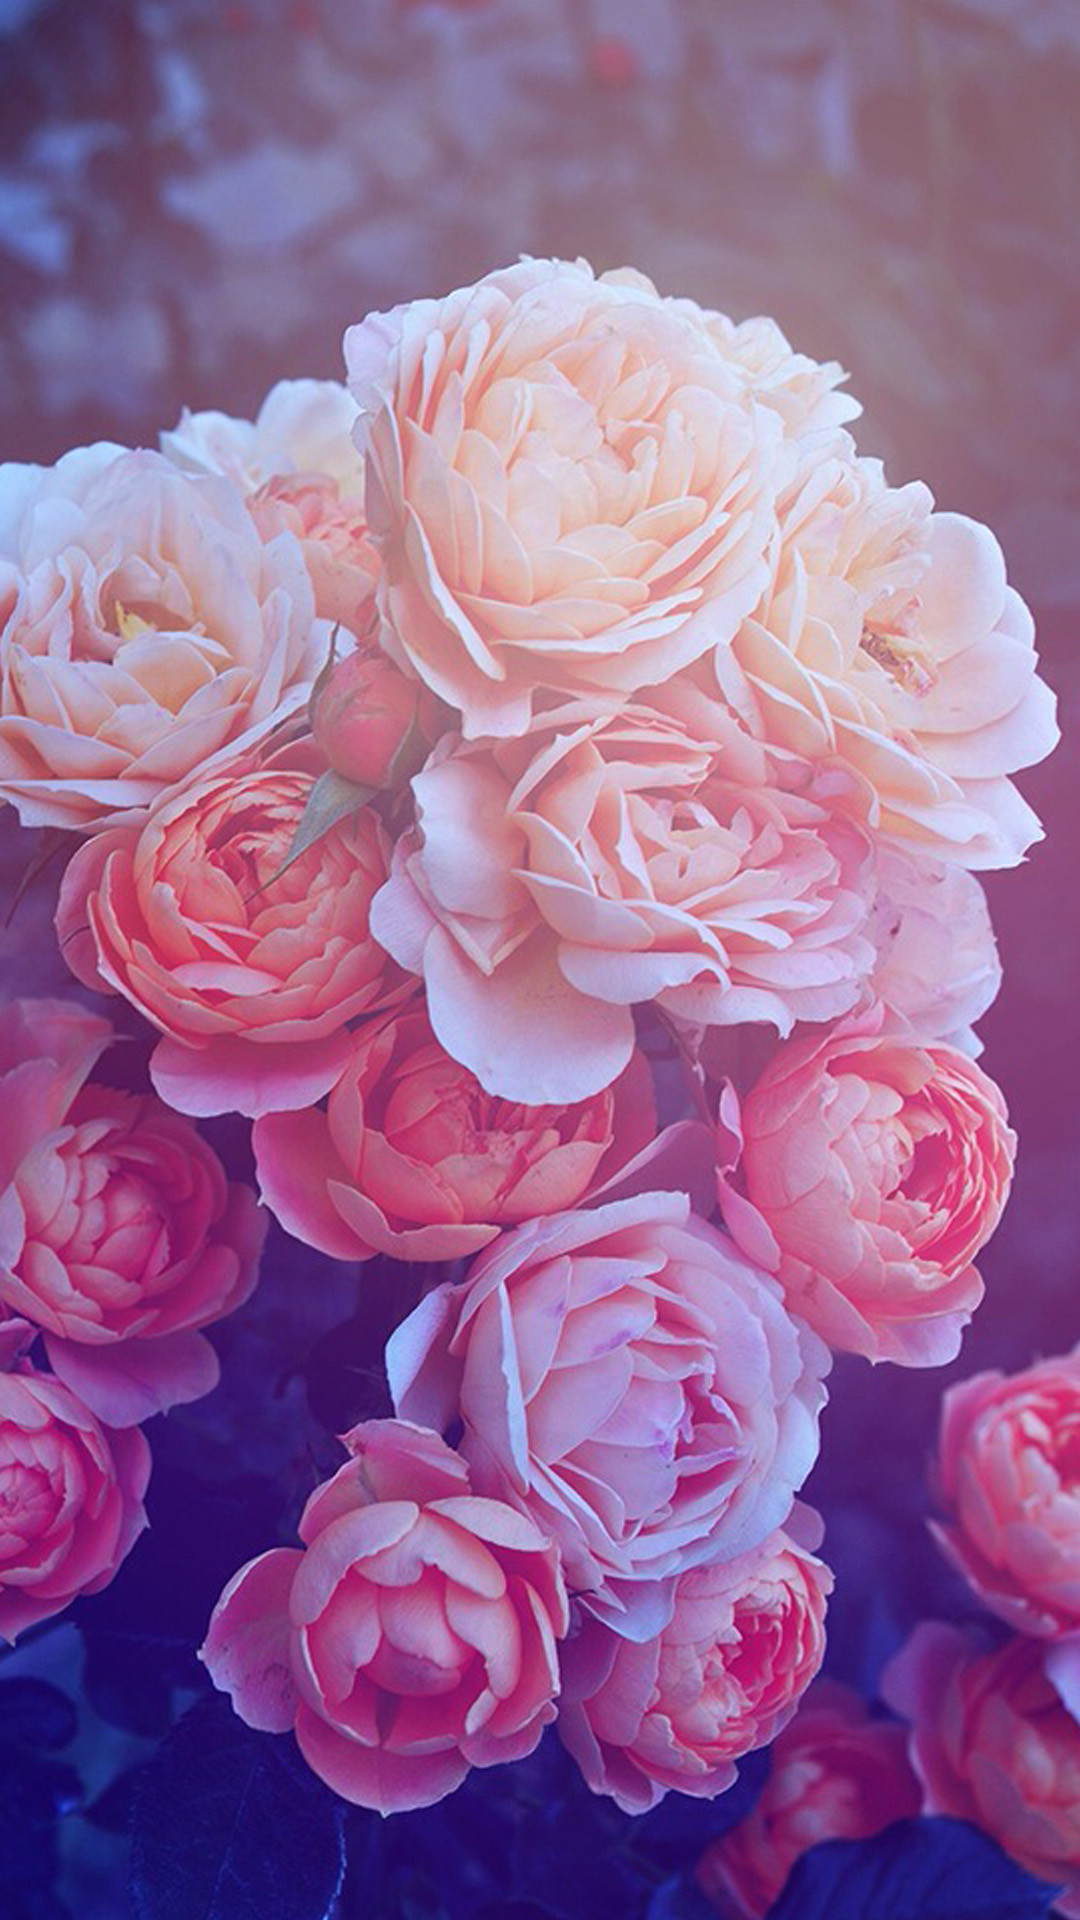 1080x1920 Pink Galaxy Iphone Wallpaper Beautiful pink roses